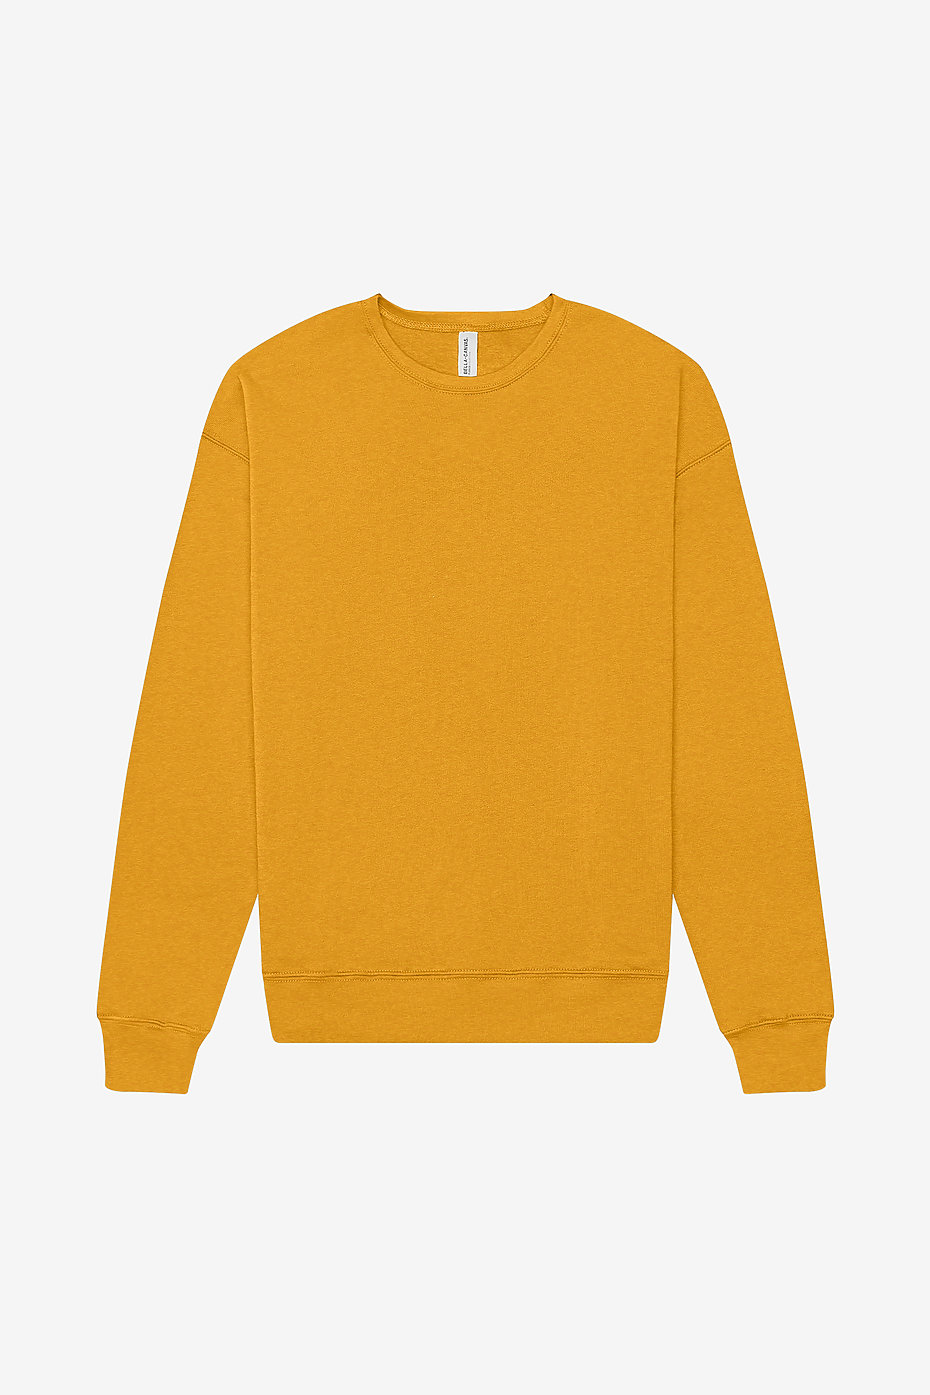 mustard crew neck sweatshirt,New daily offers,ruhof.co.uk